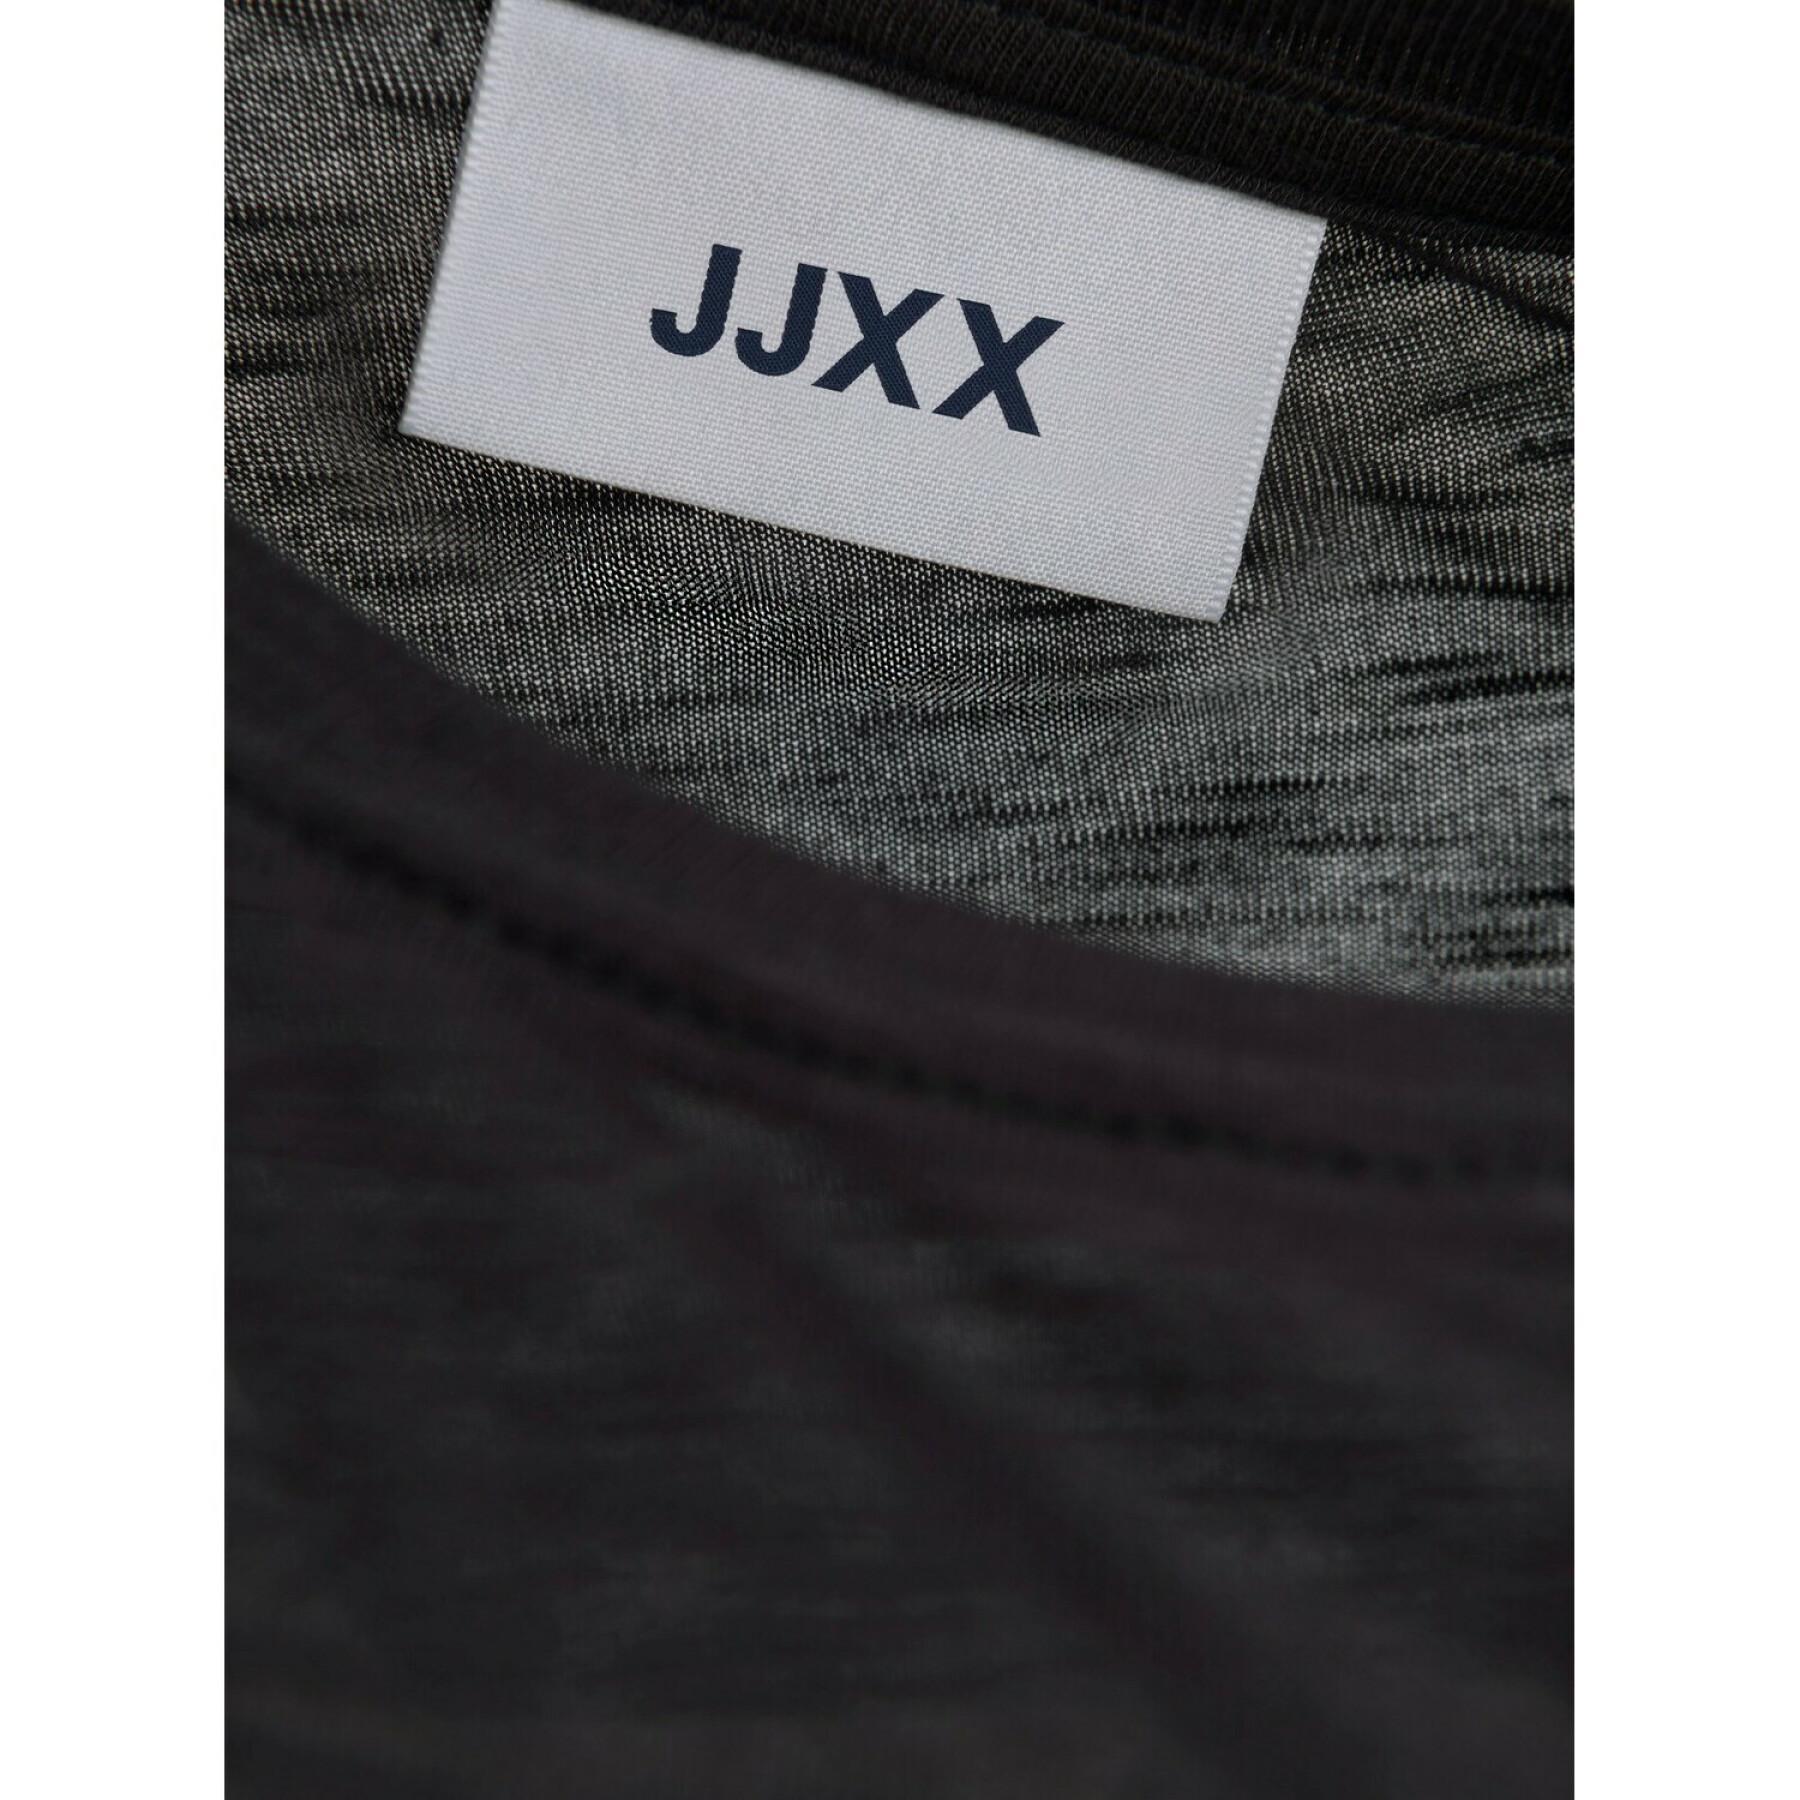 Women's large T-shirt JJXX gaia